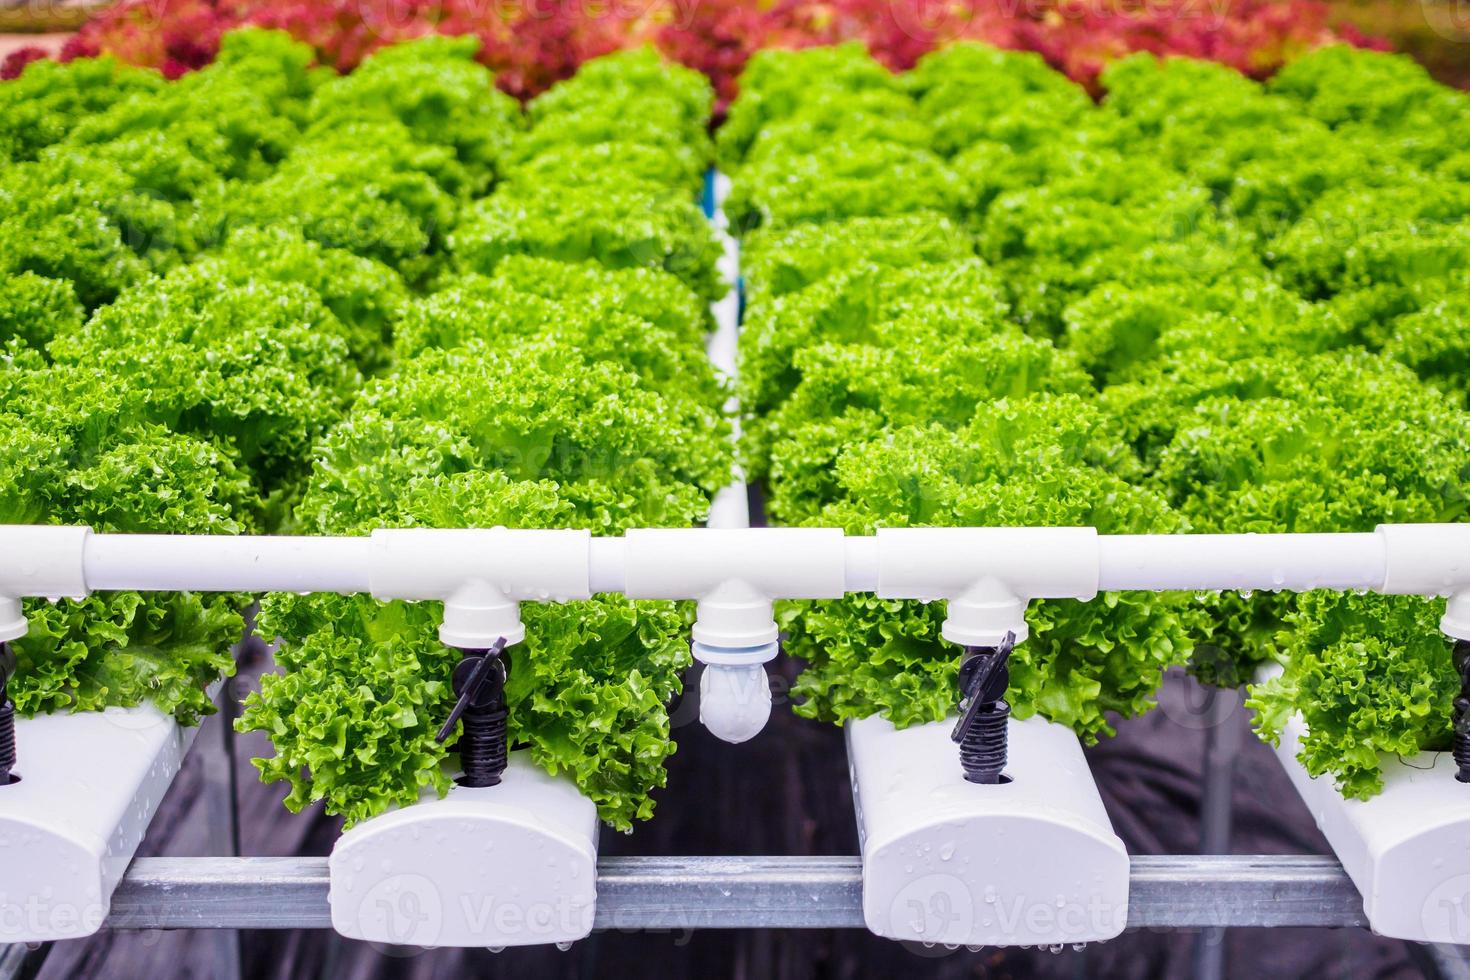 frische Bio-Grünblätter-Salatsalatpflanze im Hydroponik-Gemüse-Farmsystem foto